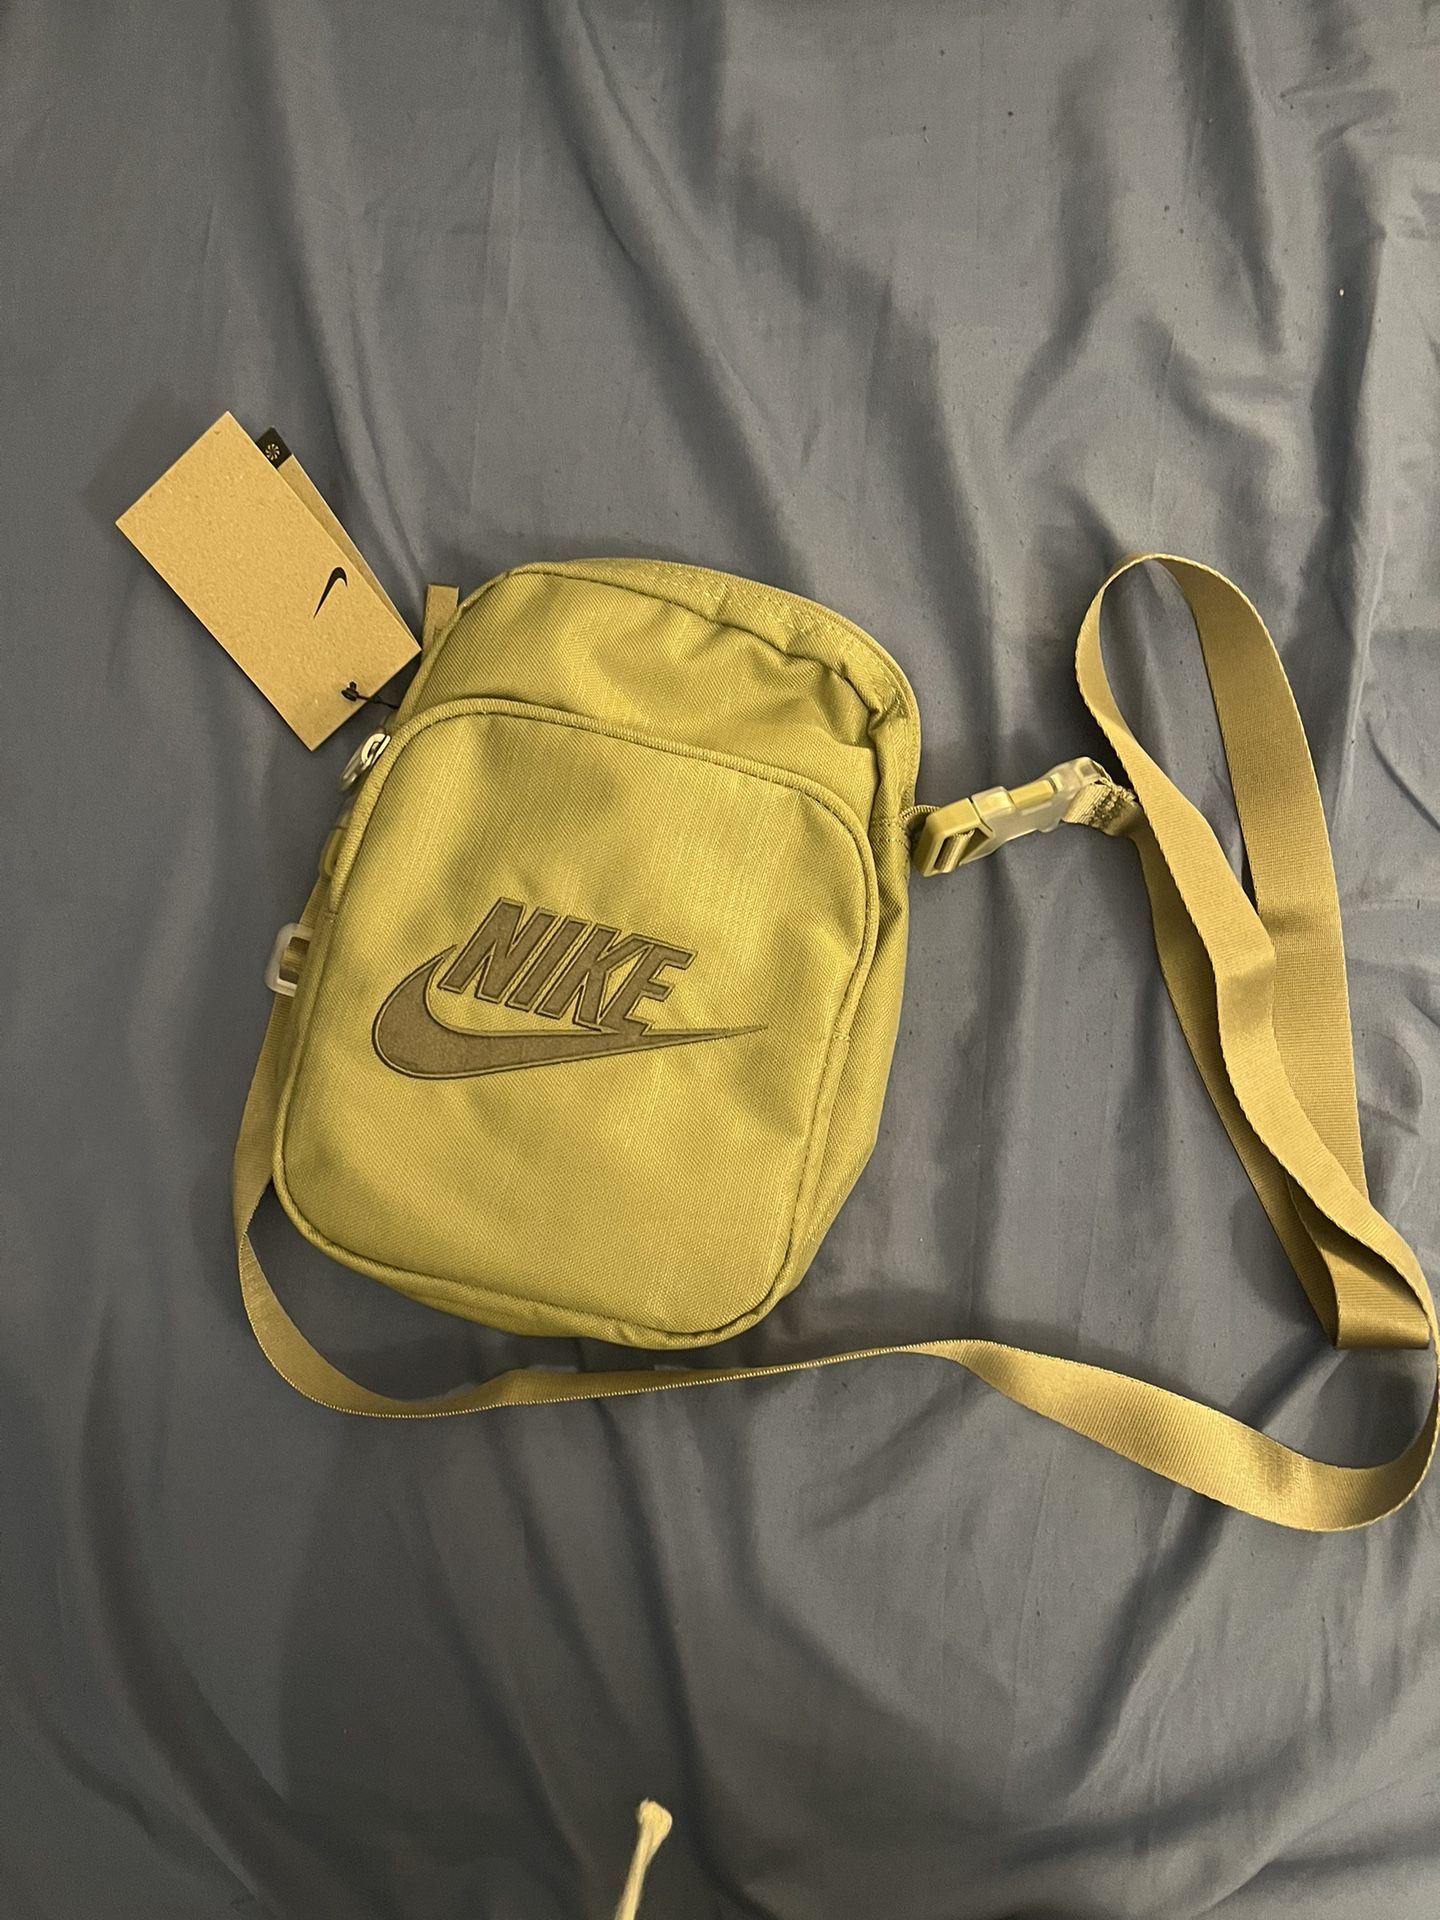 Nike crossbody bag